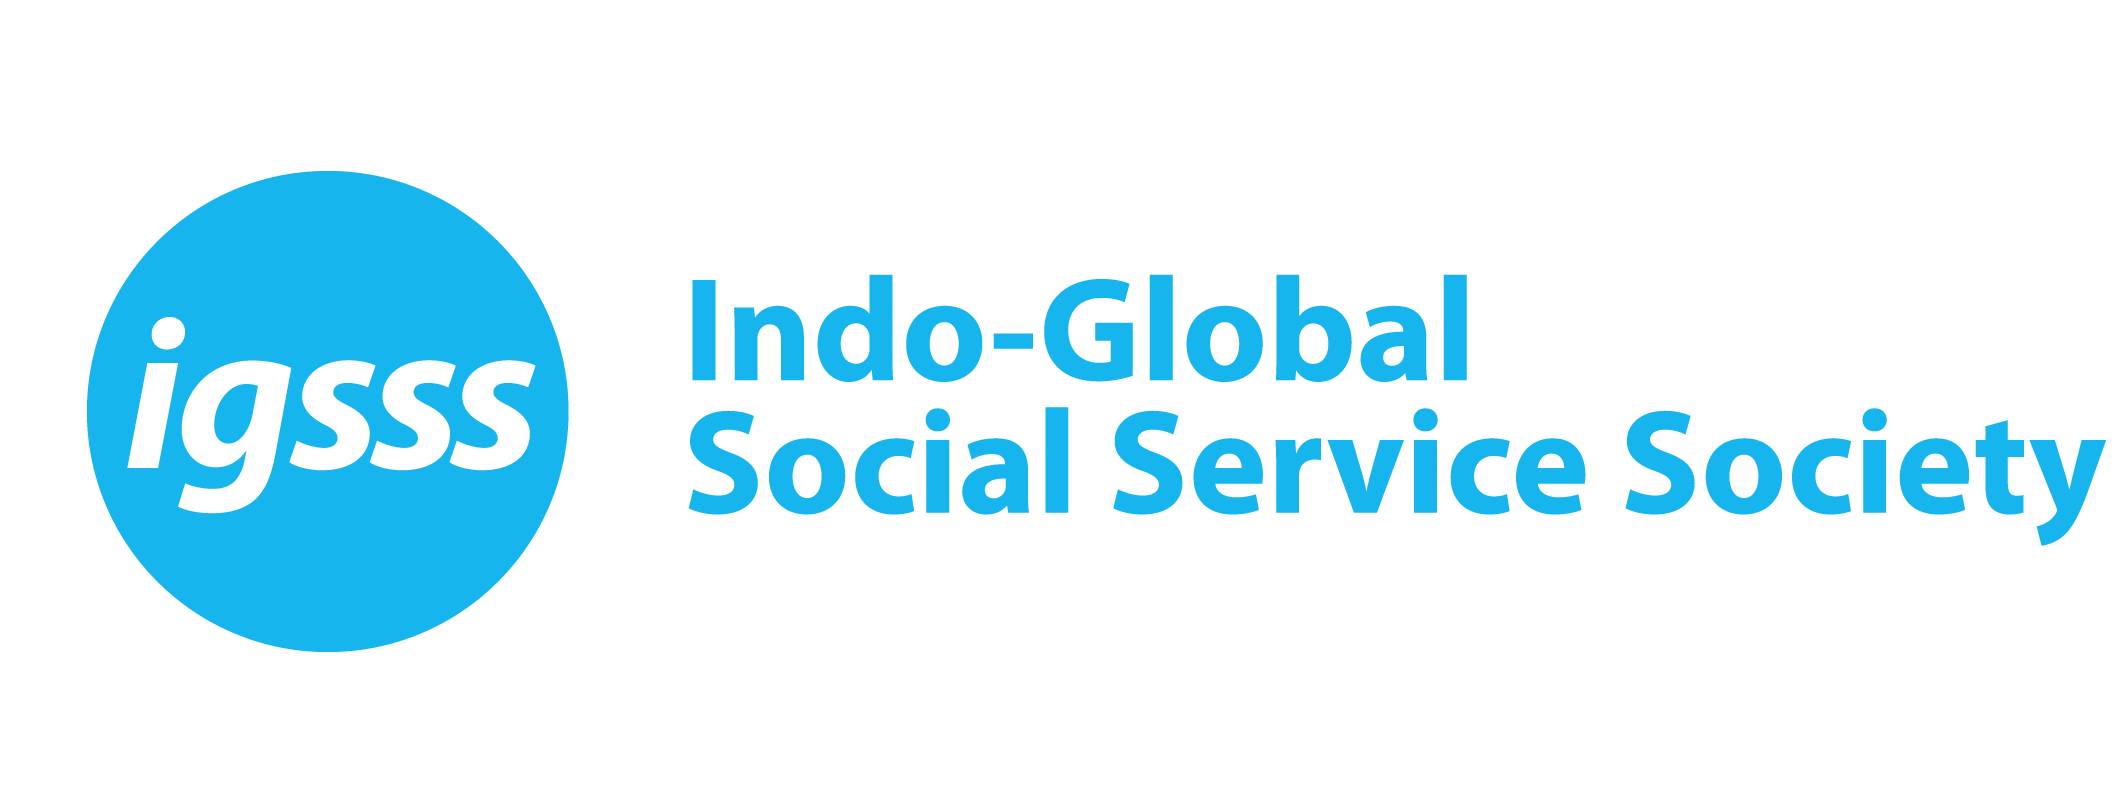 Indo-Global Social Service Society (IGSSS)